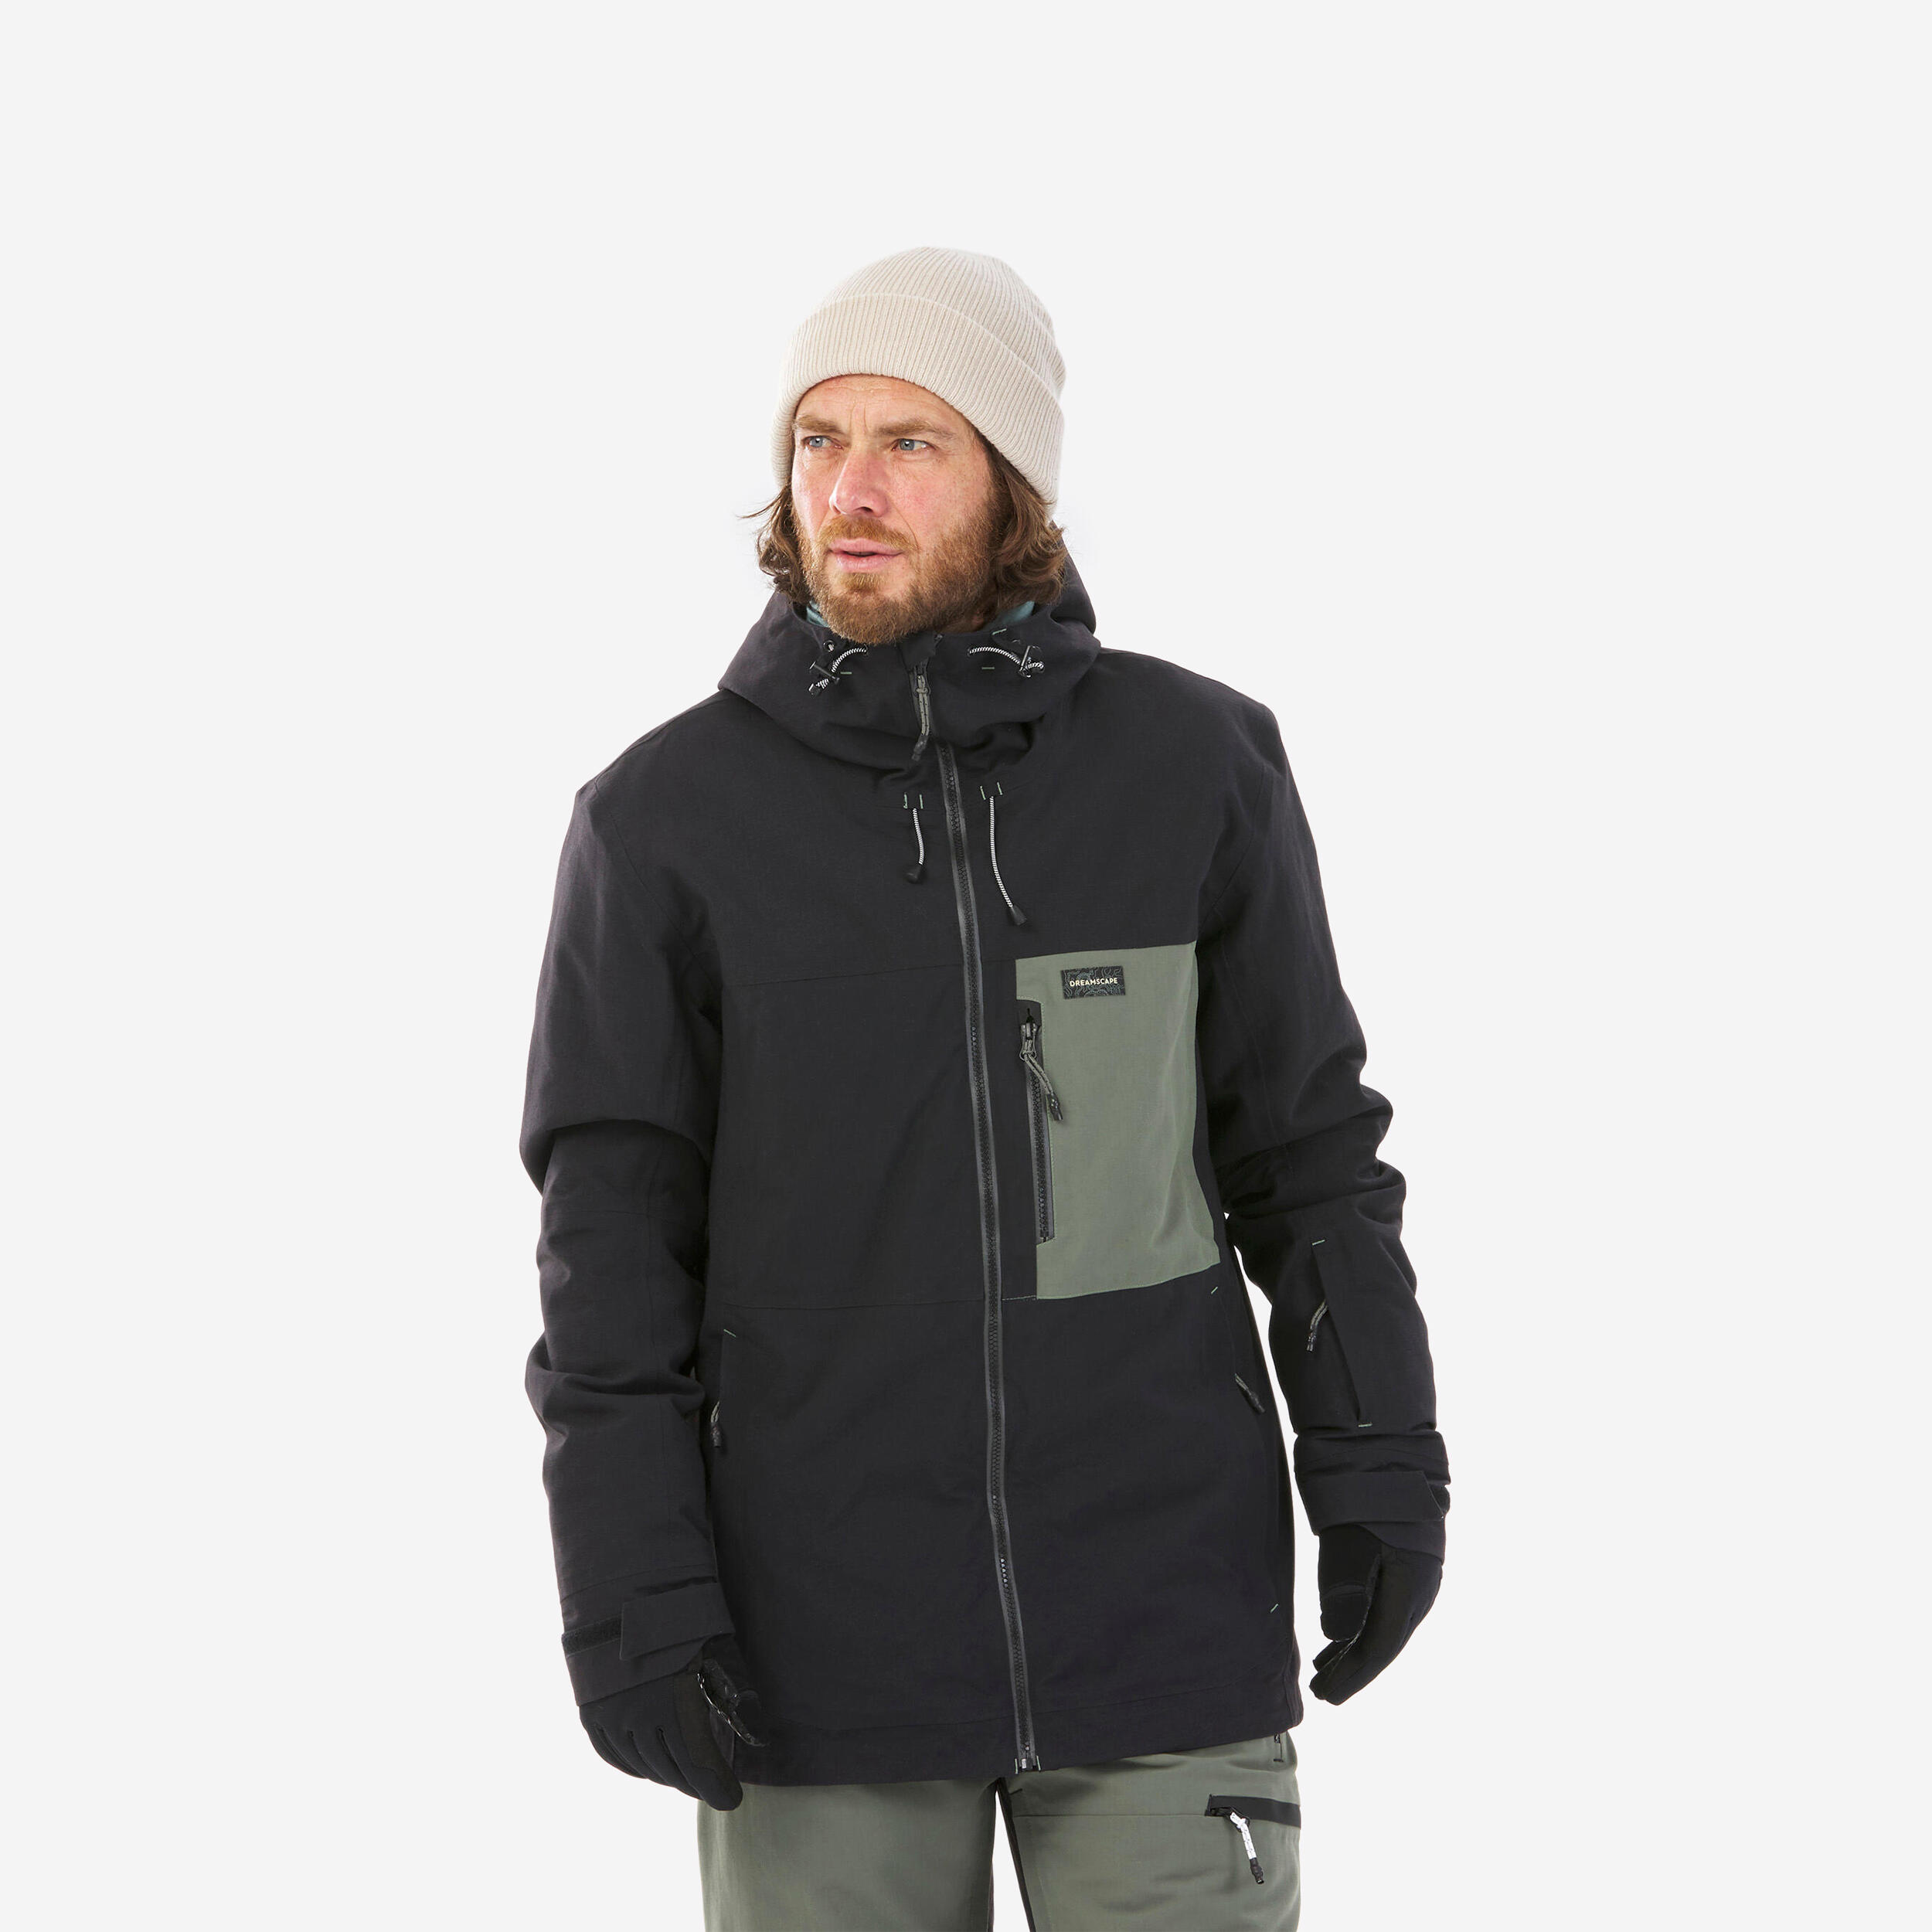 Men's snowboard jacket compatible with ZIPROTEC - SNB 500 - Black 1/18